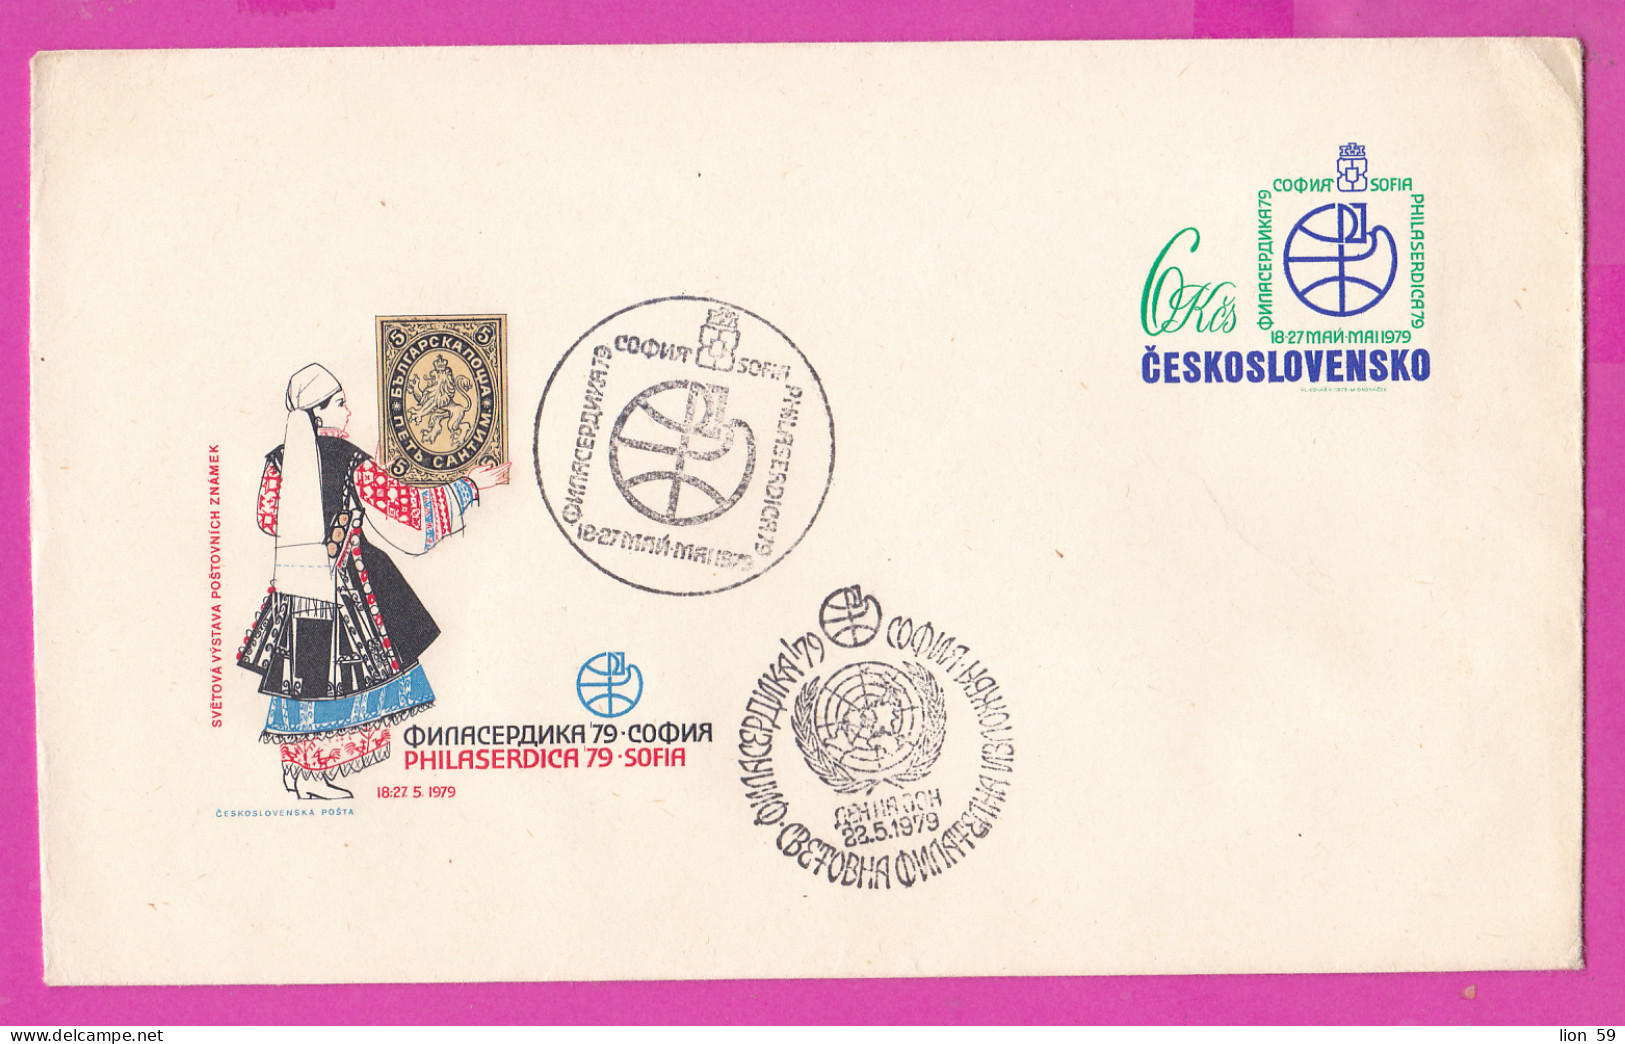 274998 / Czechoslovakia Stationery Cover 1979 - World Philatelic Exhibition Philaserdica'79 Bulgaria Woman Folk Costume  - Omslagen